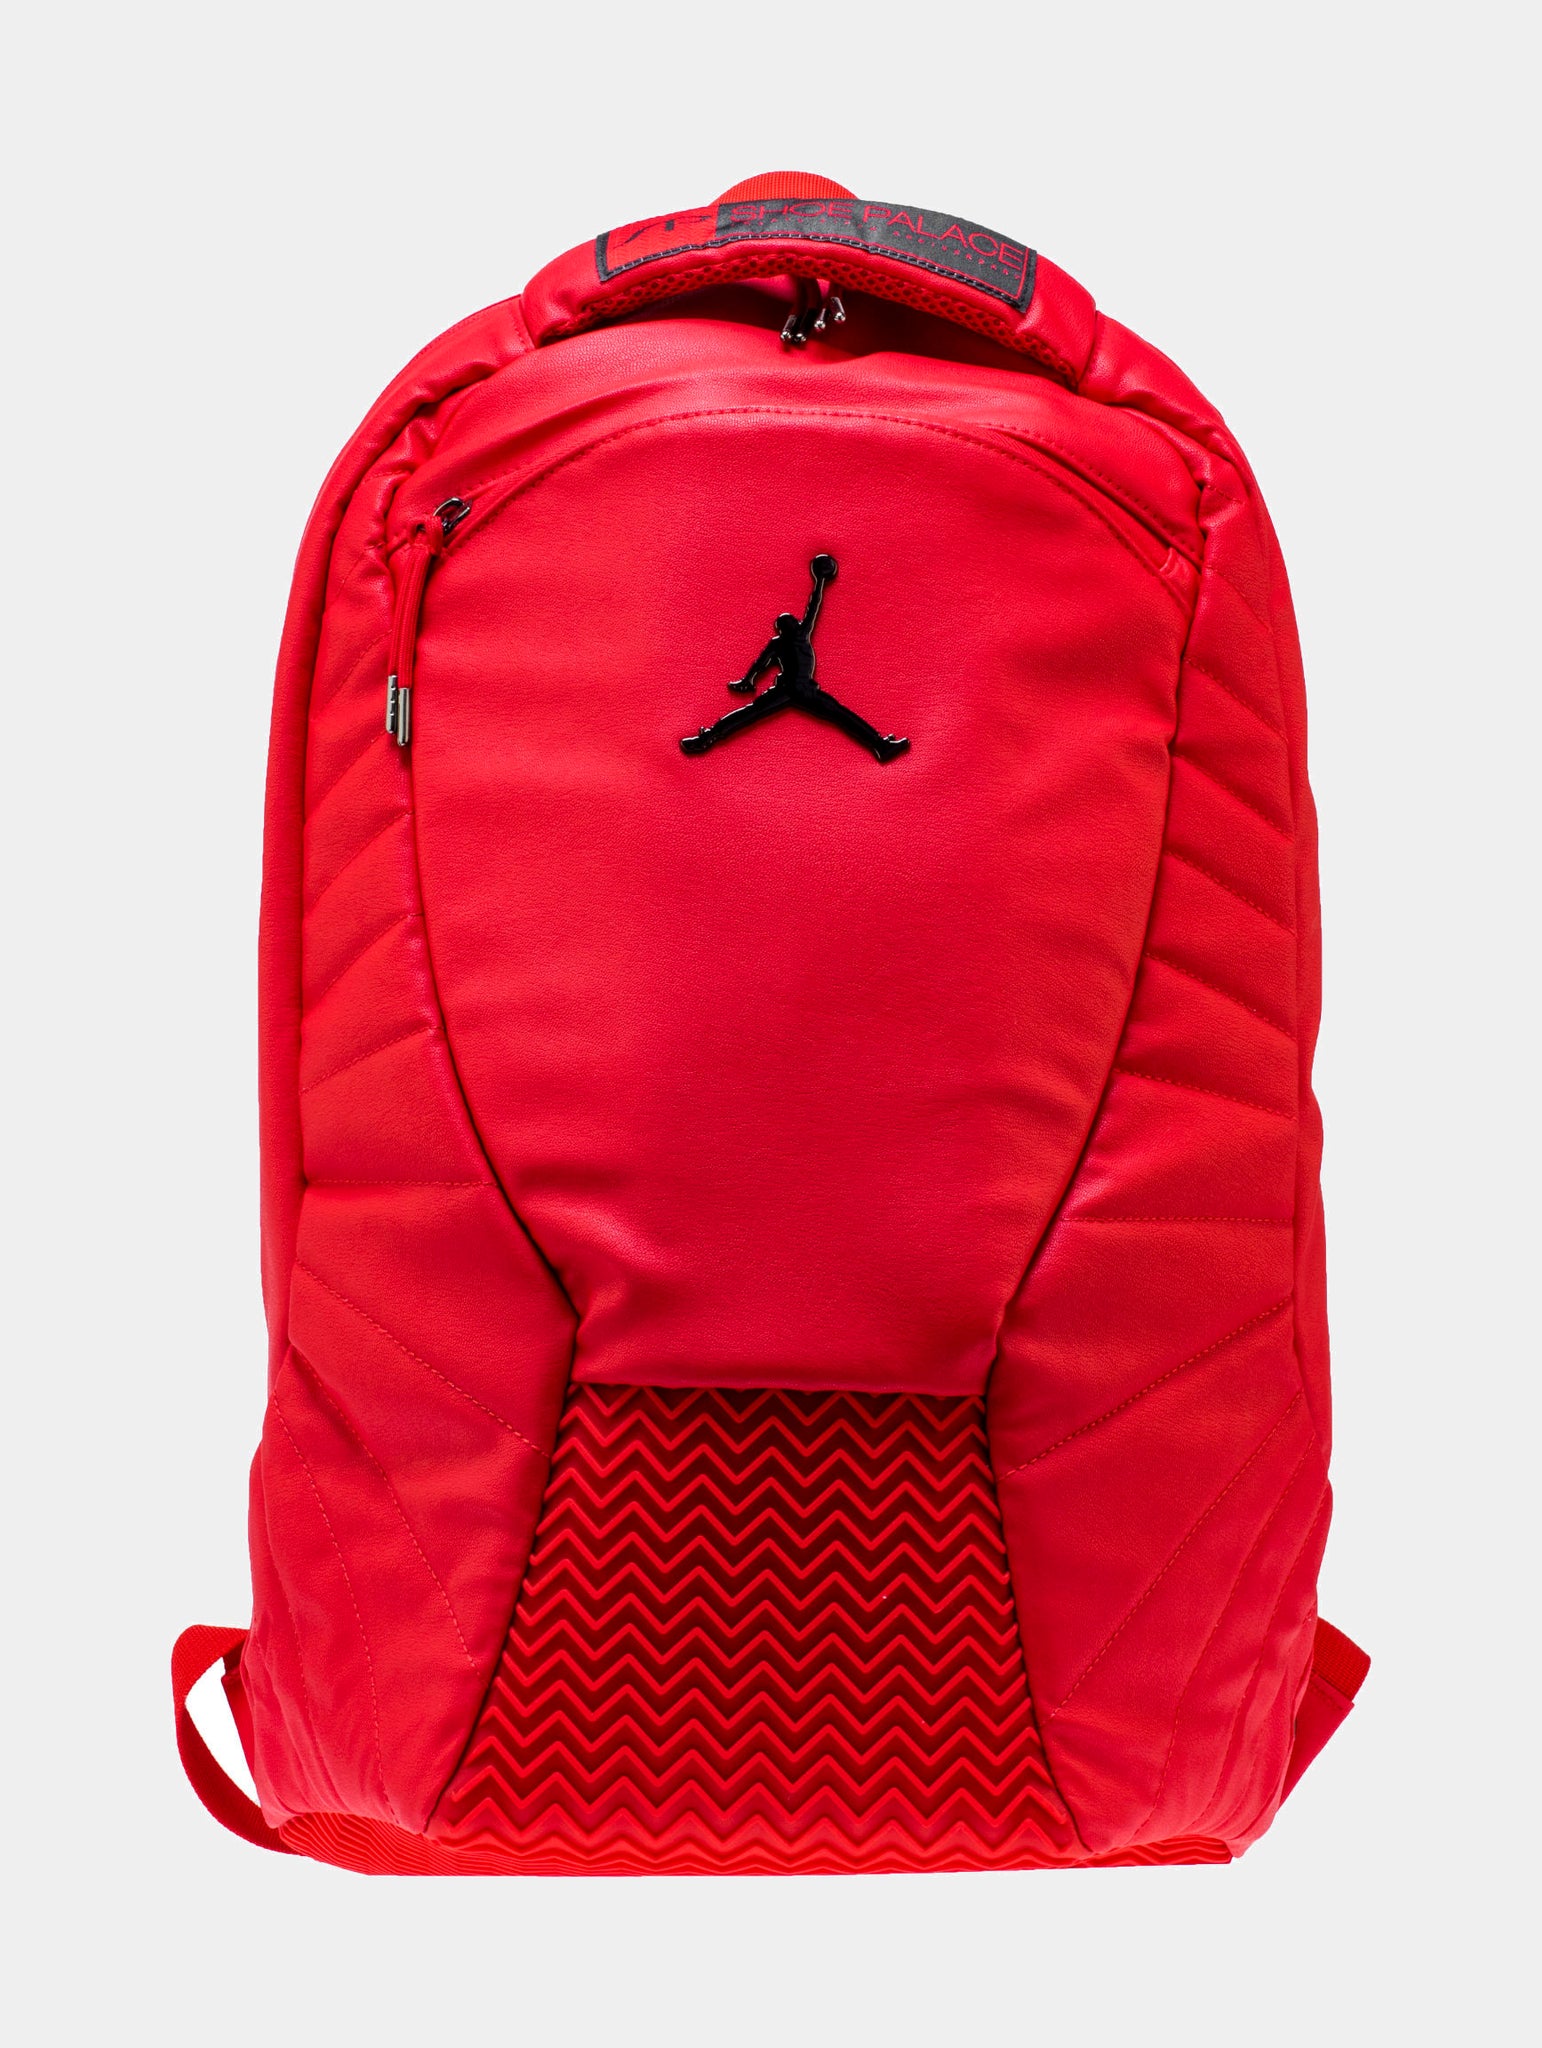 Haddad Jordan 12 X Shoe Palace 25 Exclusive Mens Backpack Red